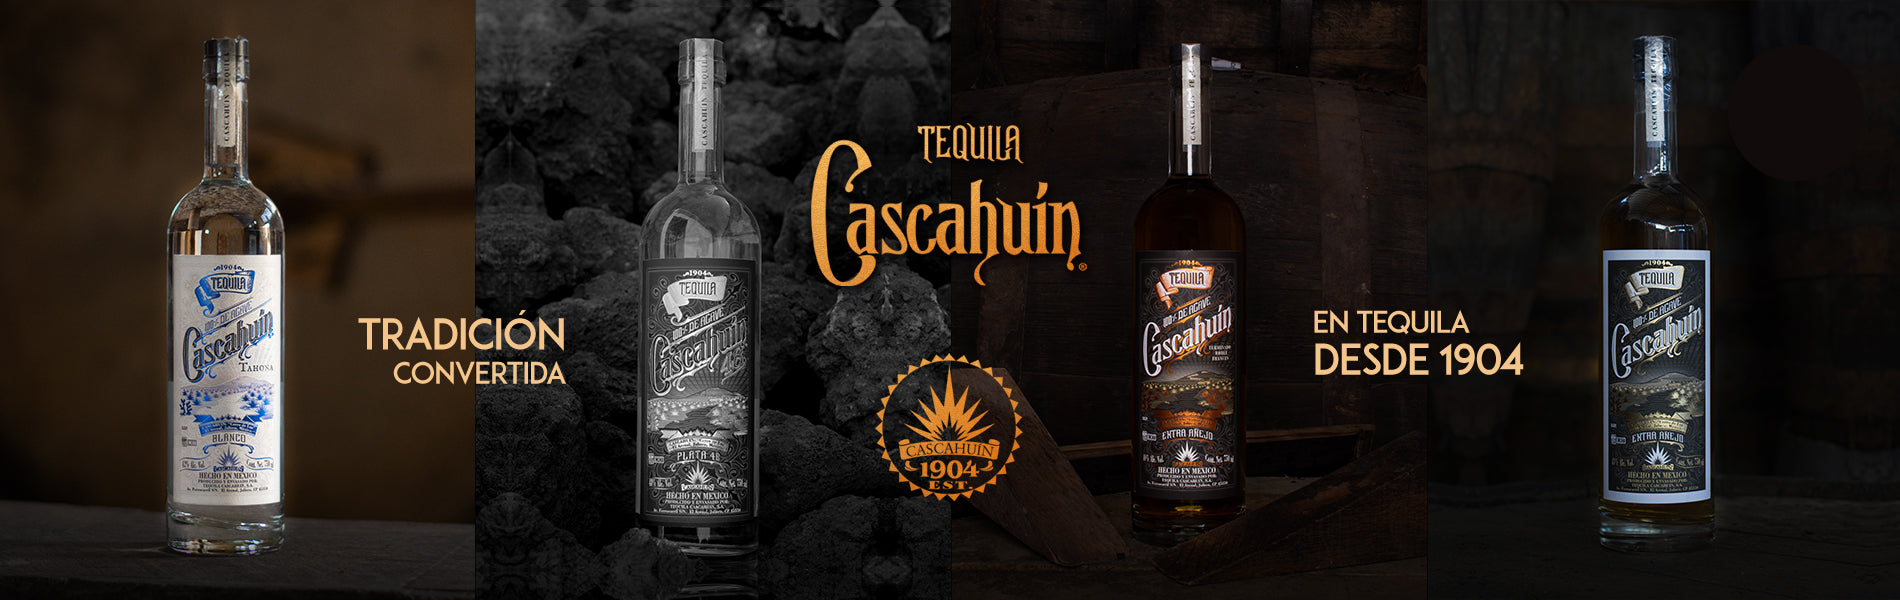 Tequila cascachuin